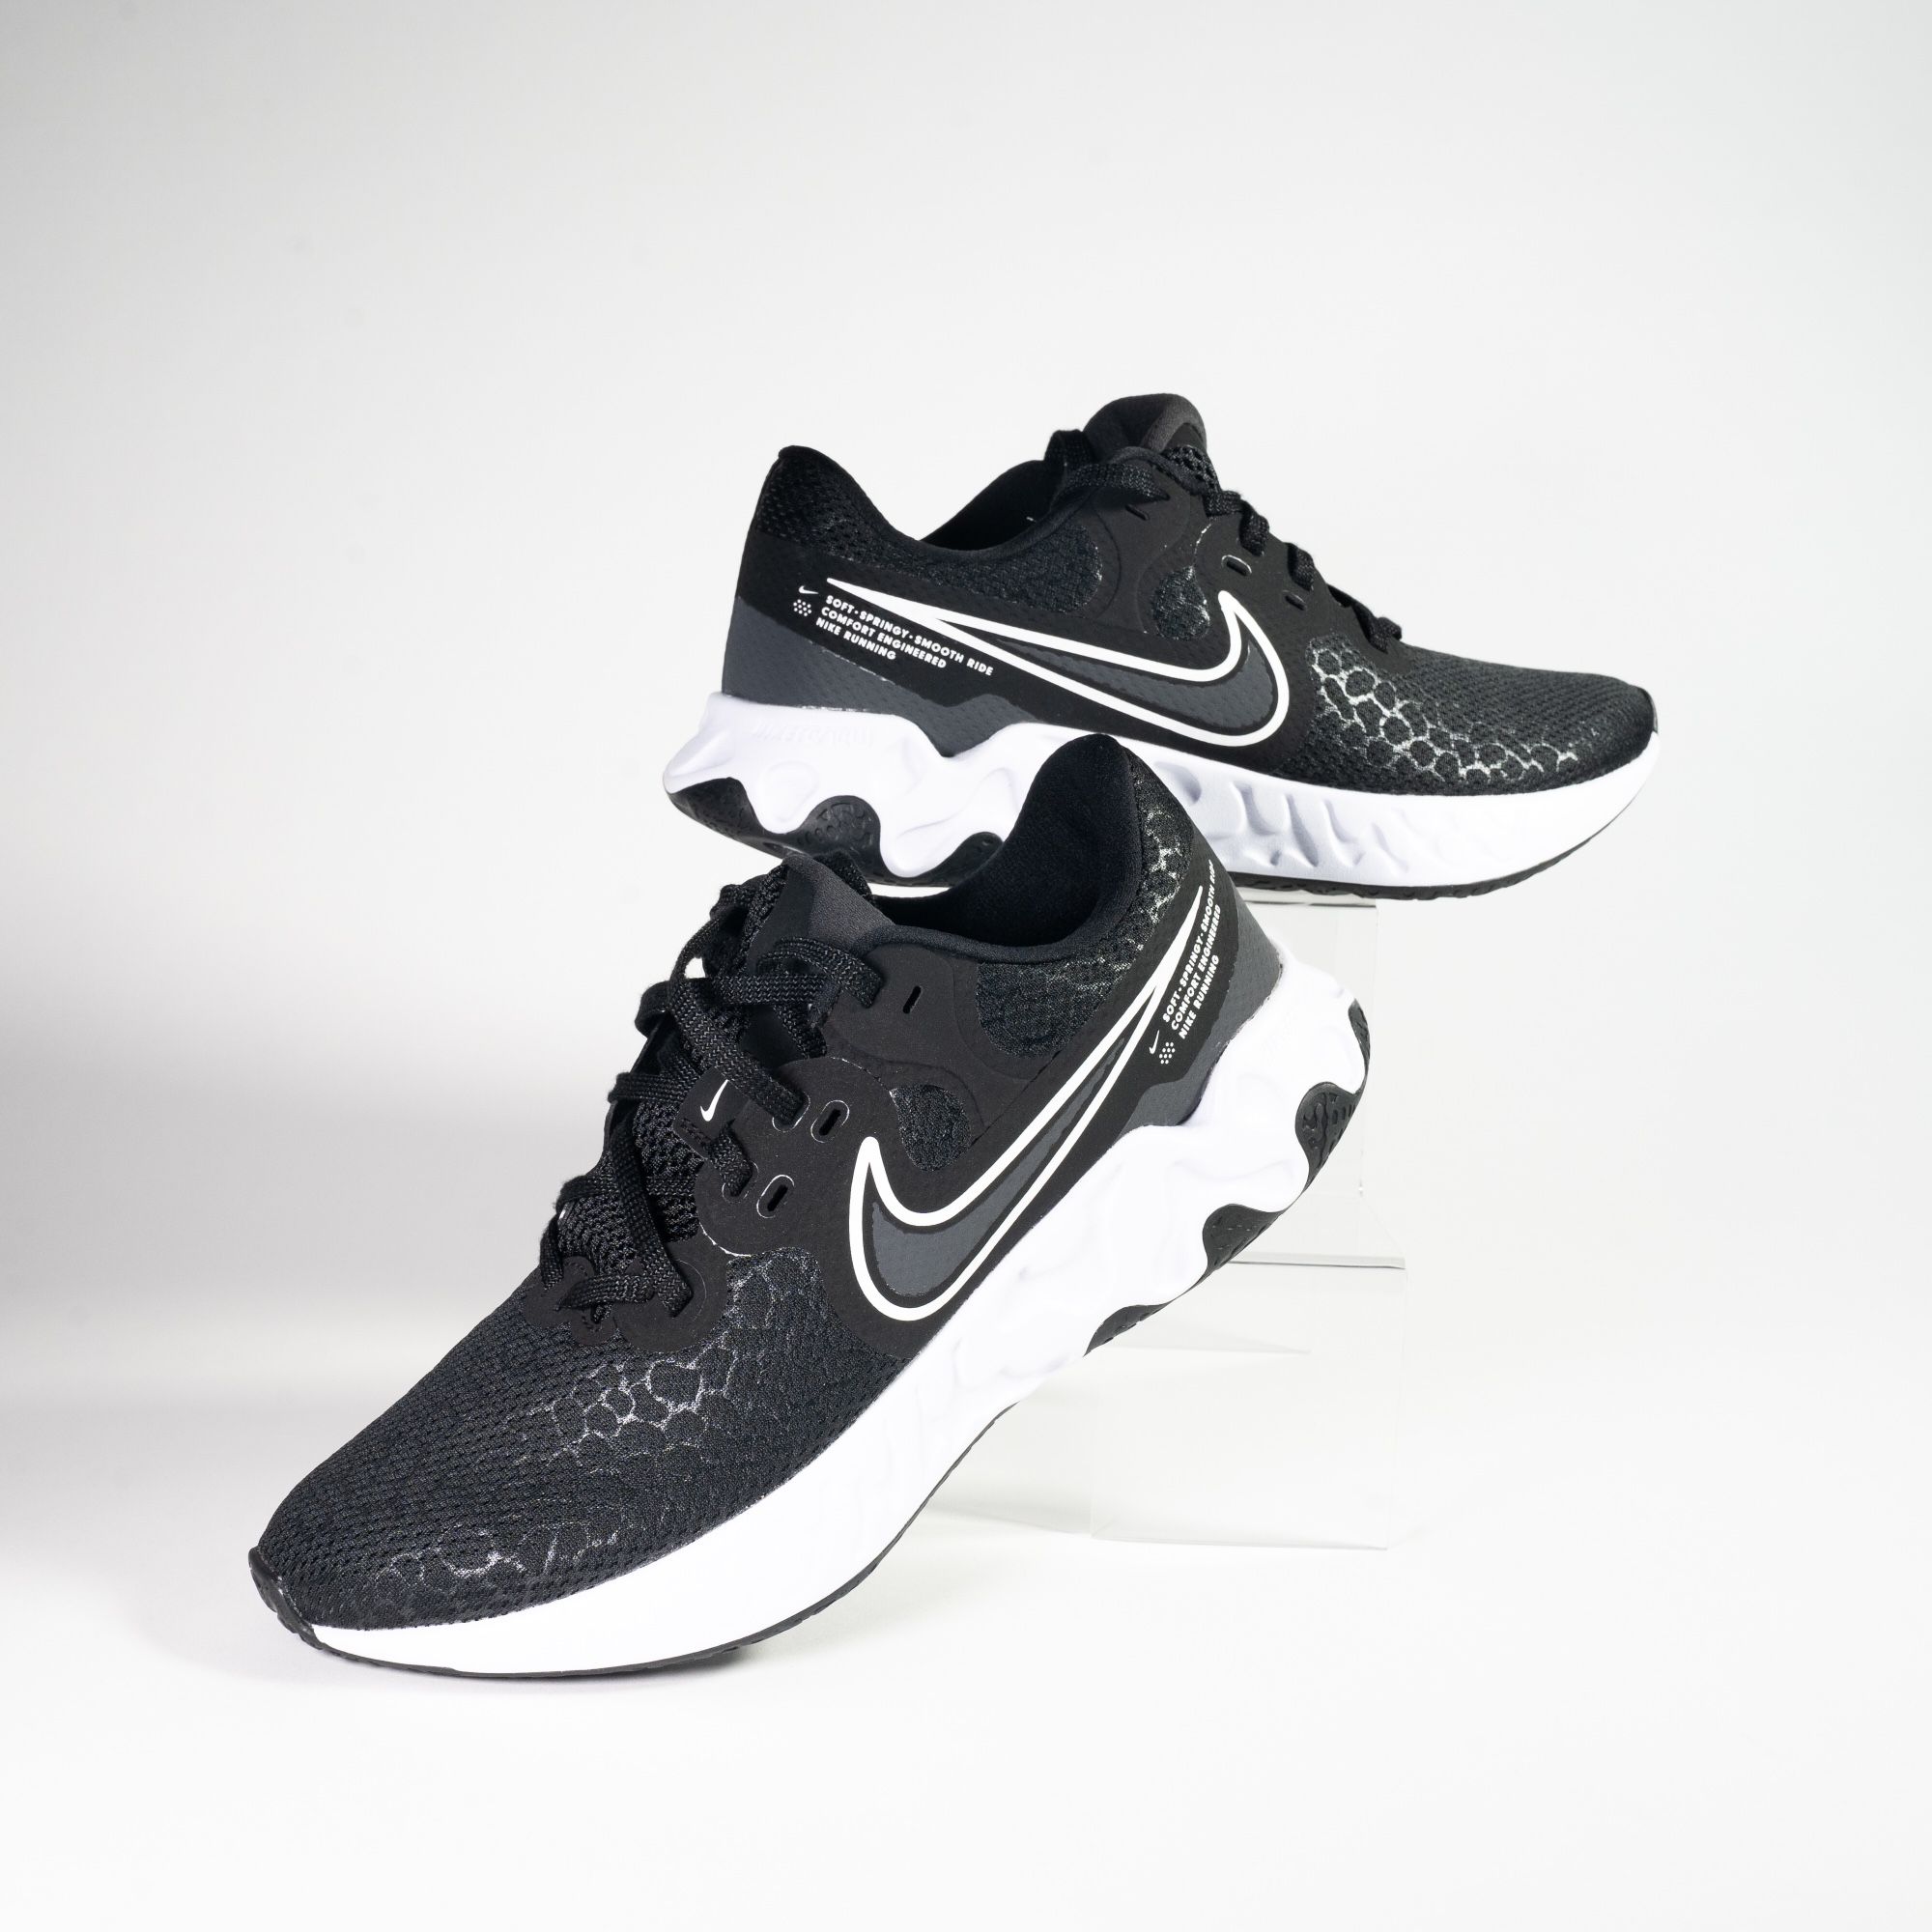 Womens Nike Renew Ride 2 Running Athletic Tennis Shoes CU3508-004 Sz 11